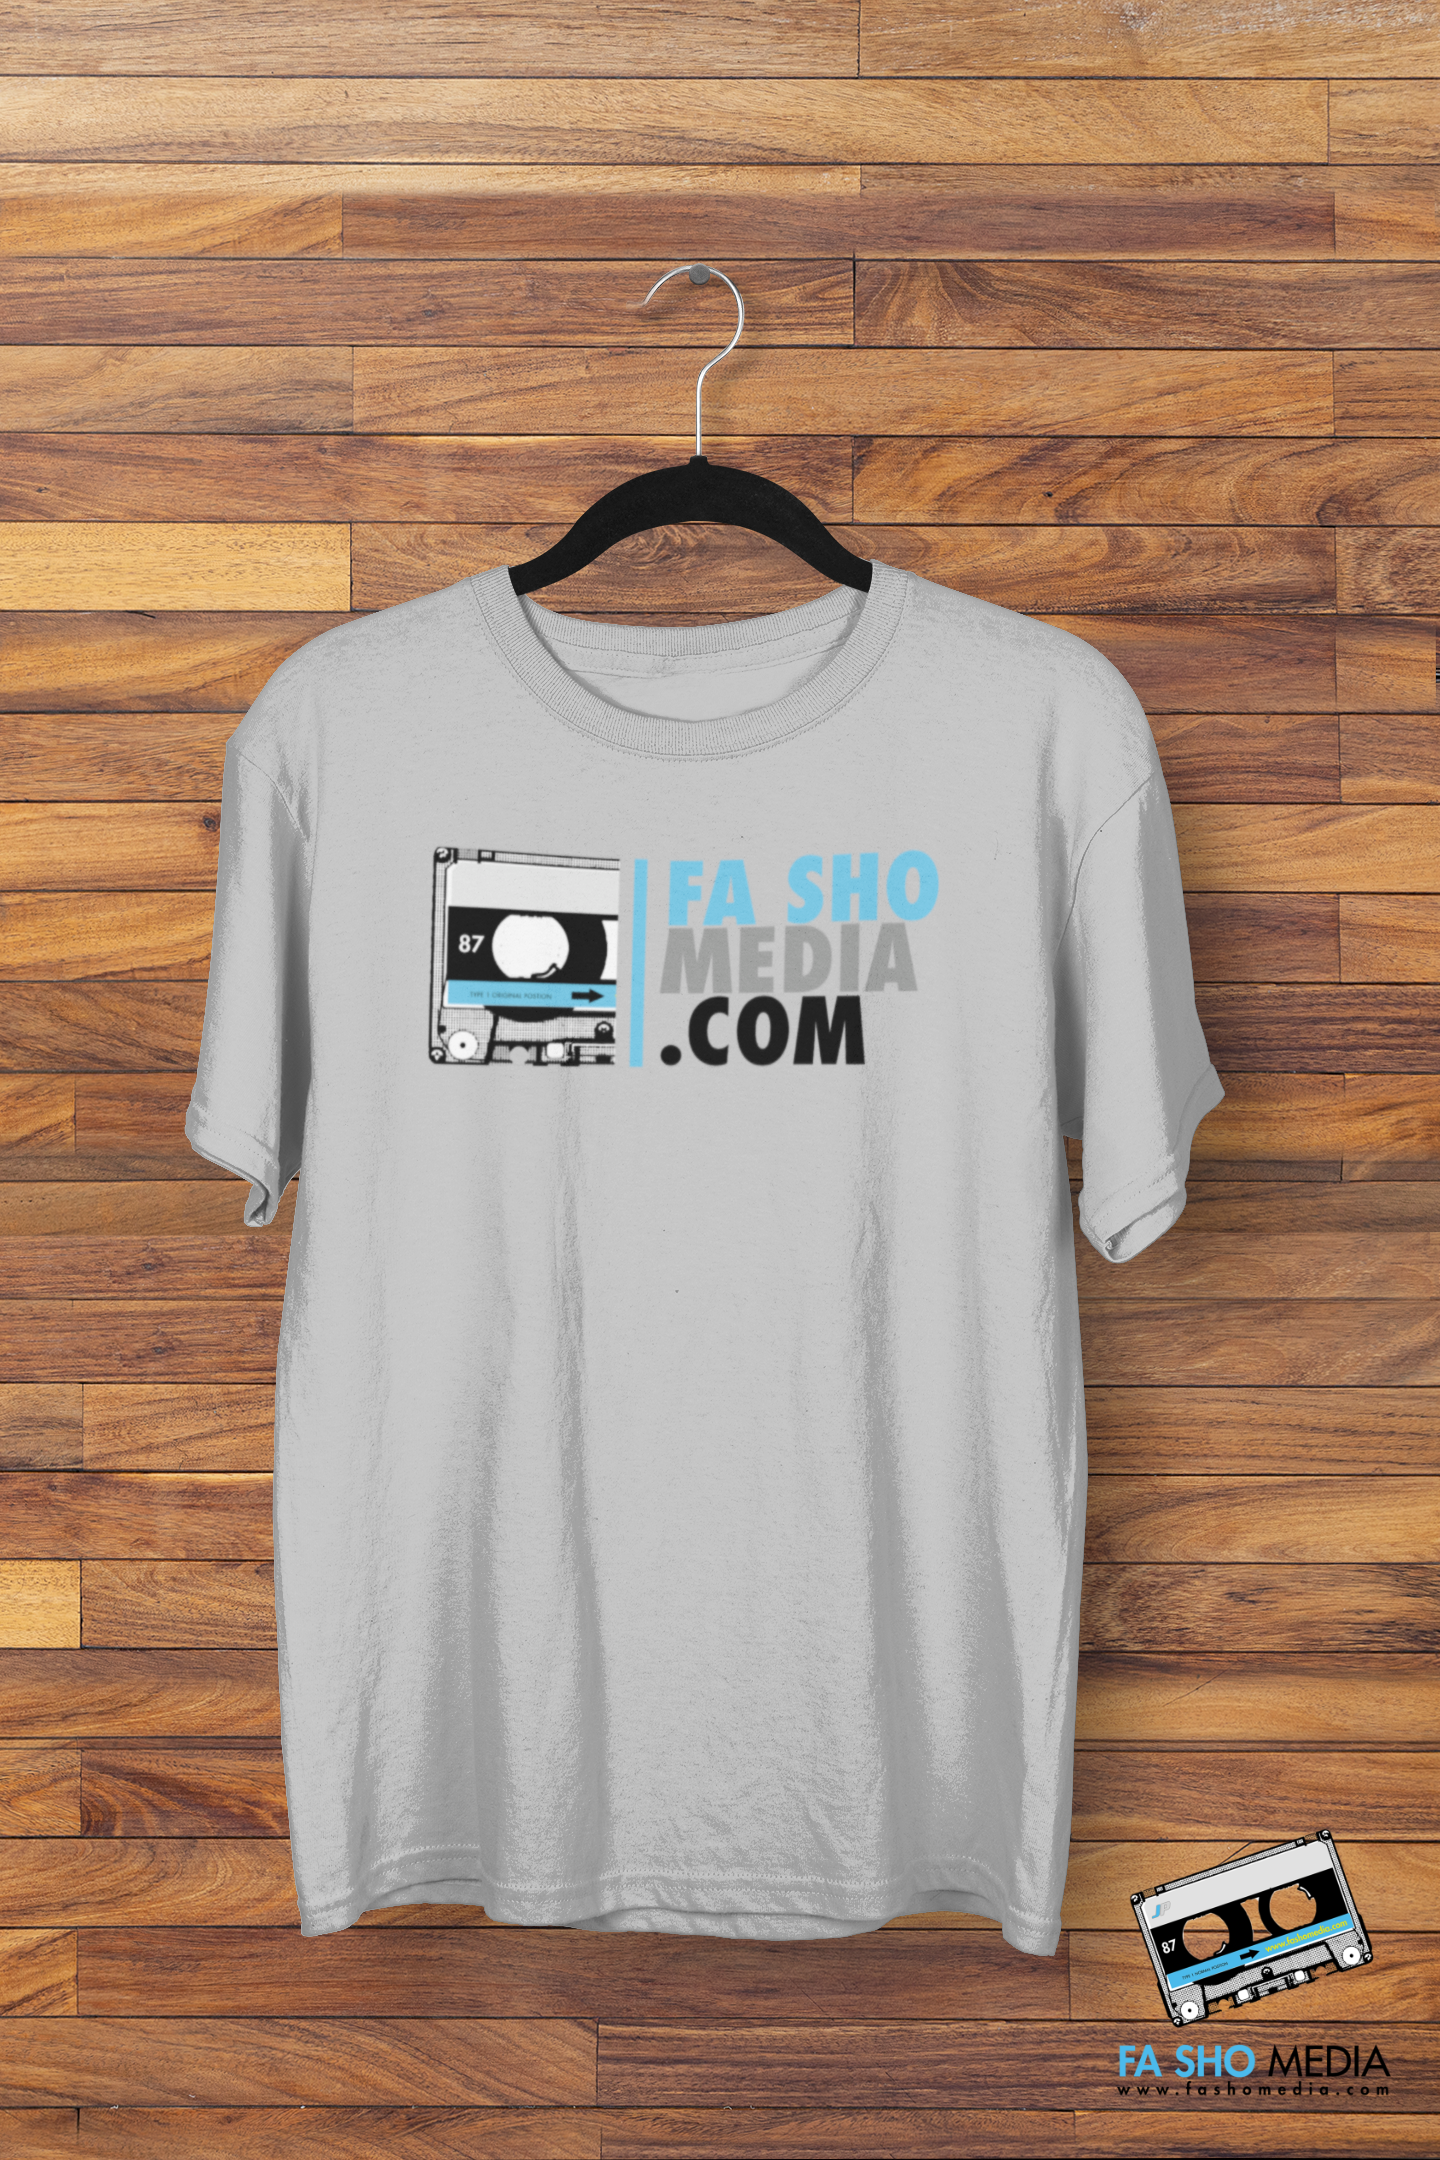 Fa Sho Media Cassette Shirt